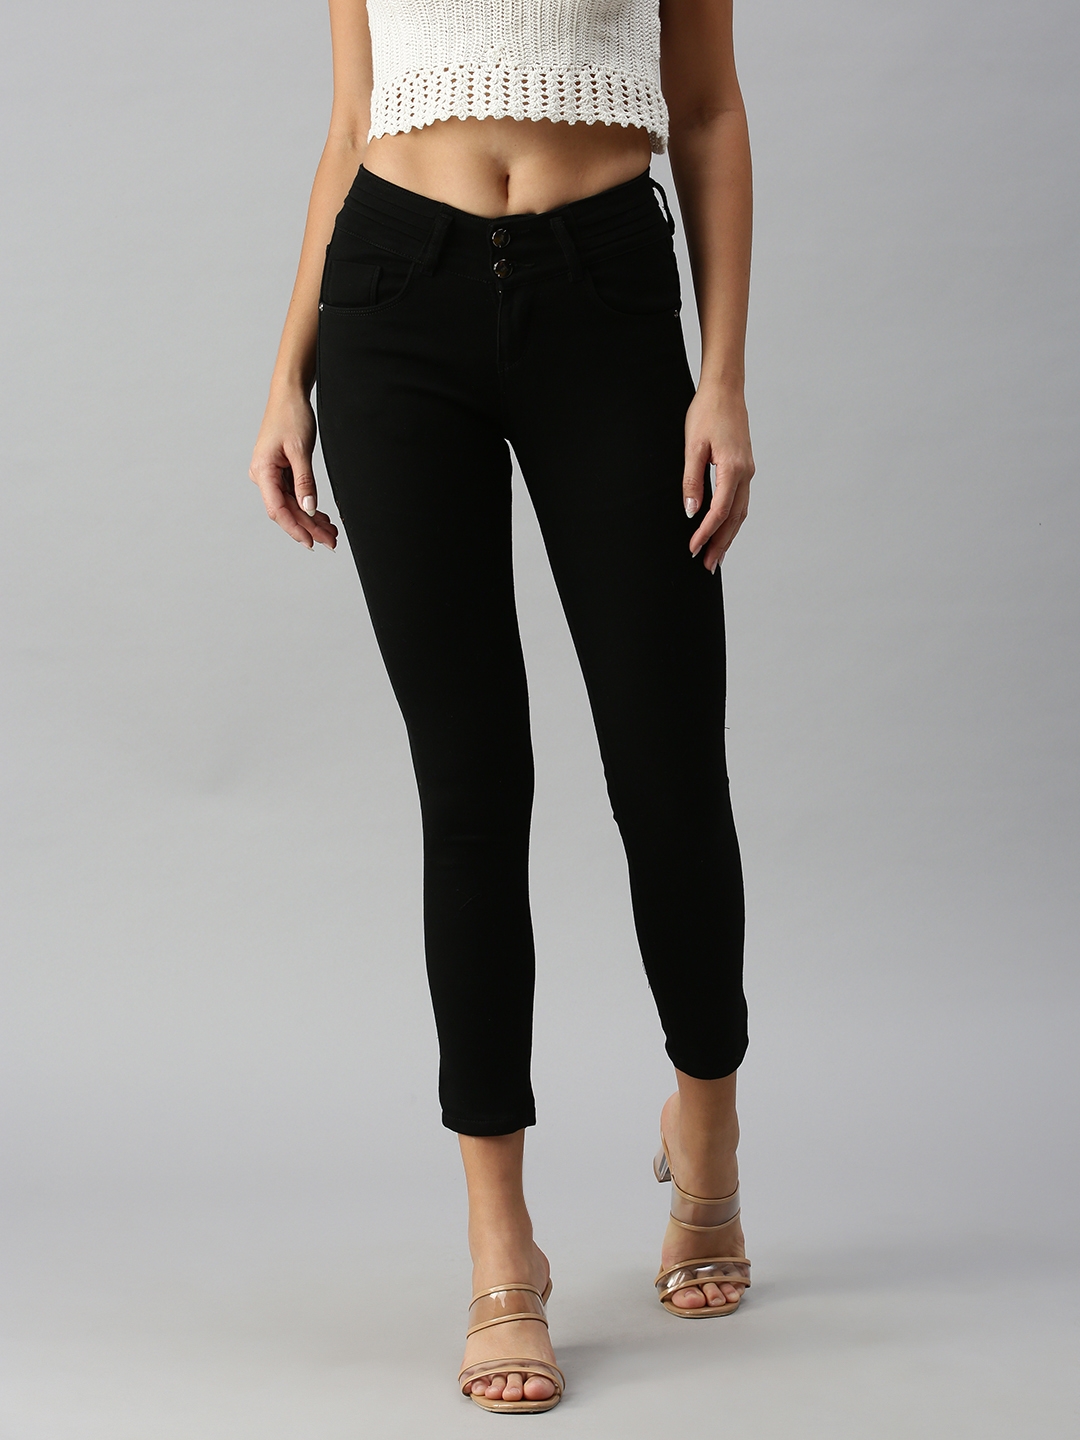 Showoff | SHOWOFF Women's Skinny Fit Clean Look Black Jeans 0